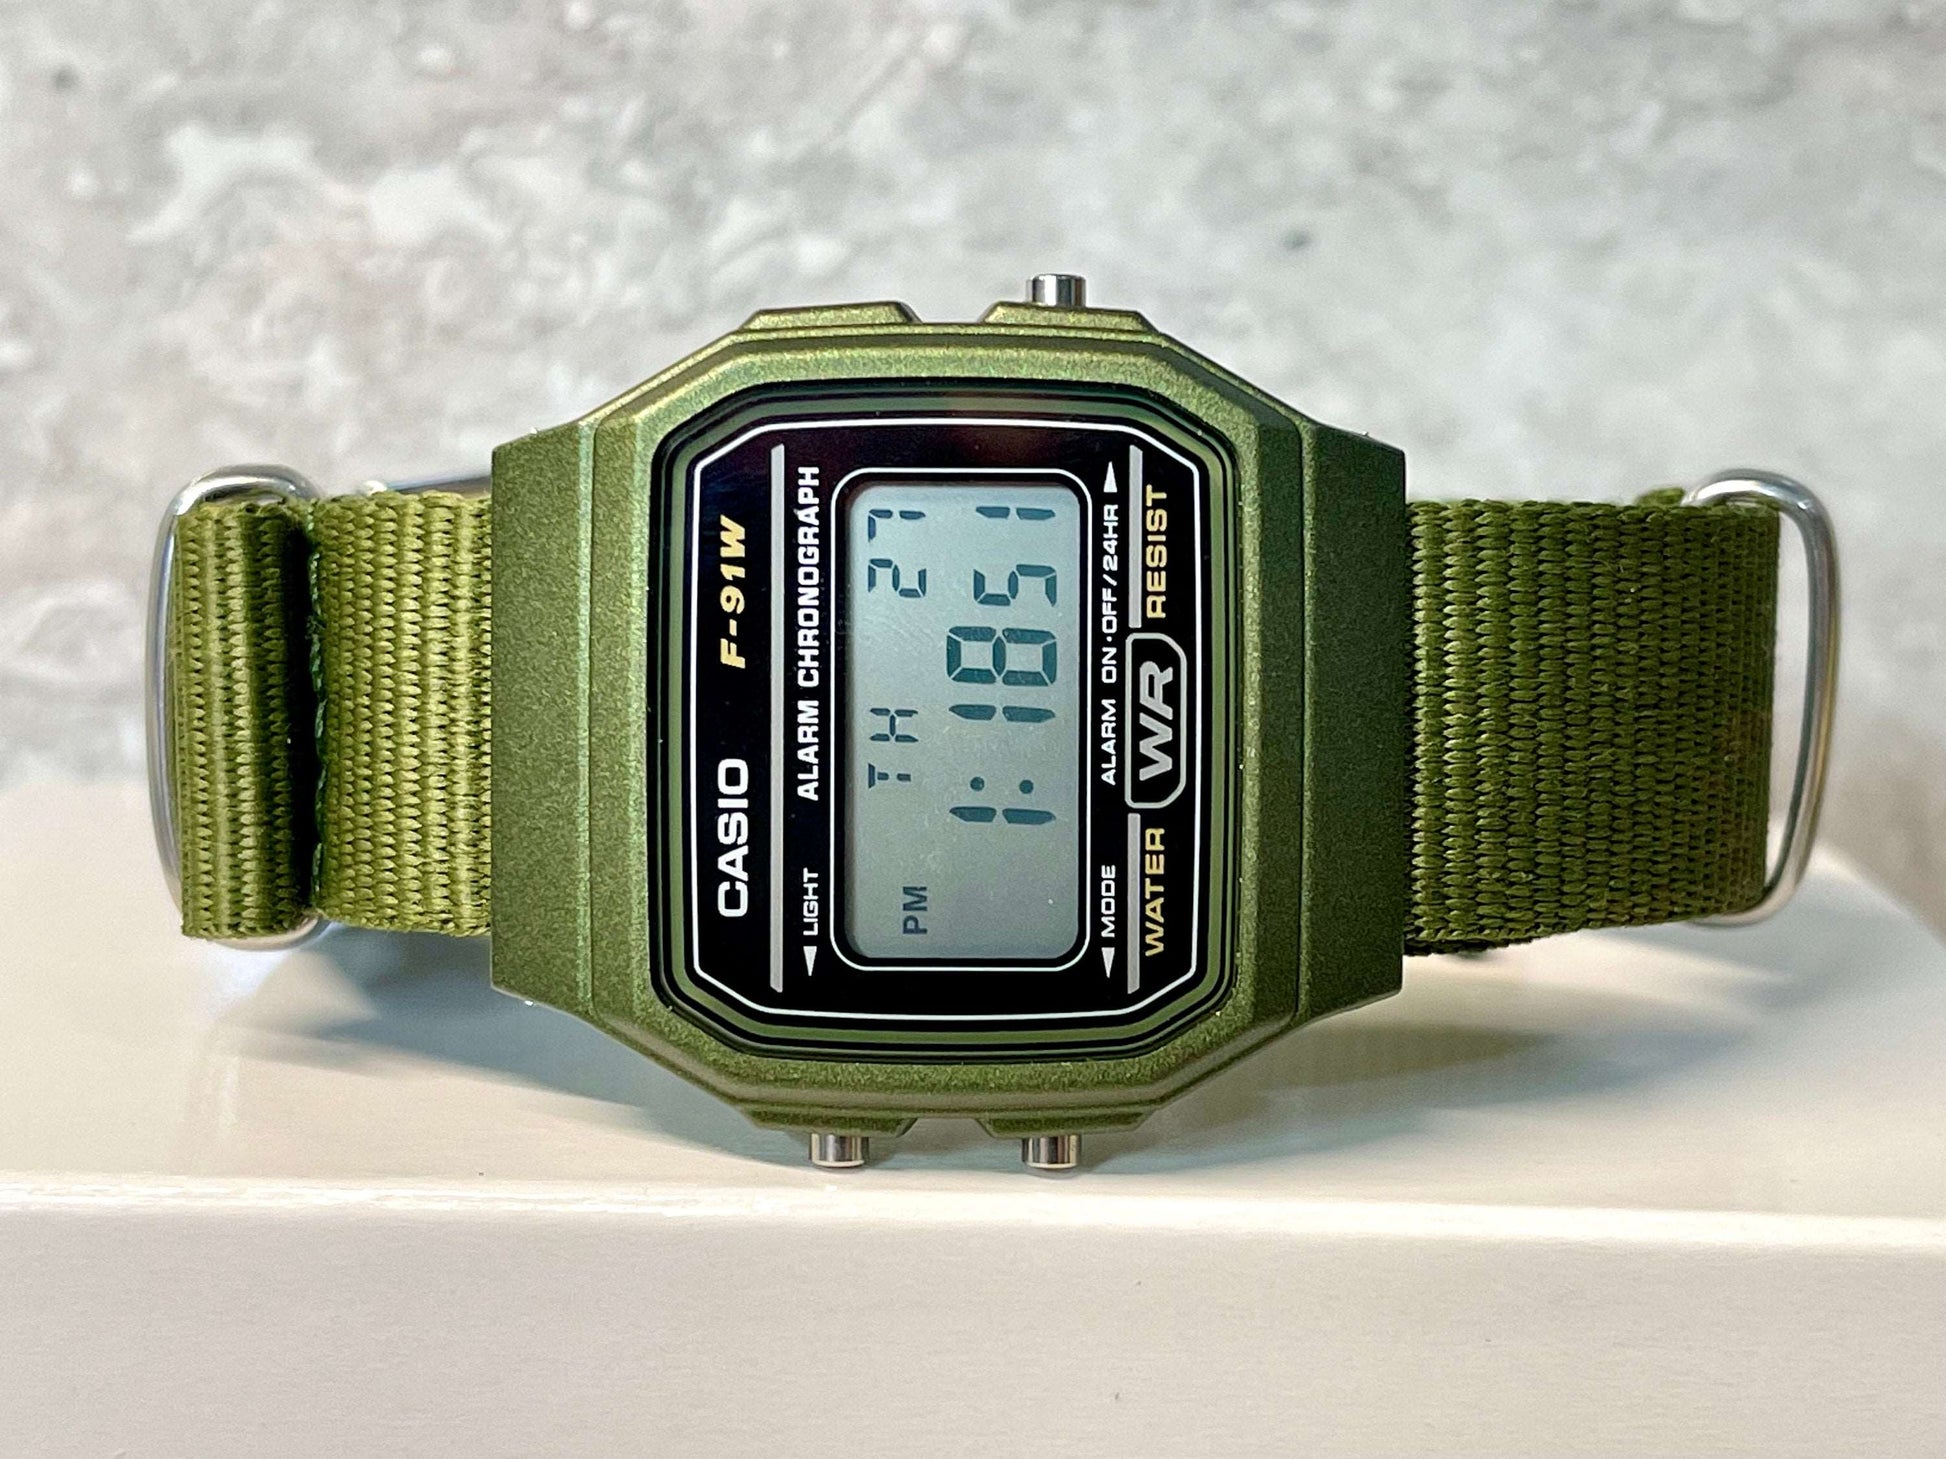 Modded Retro Casio F91W Watch, on a green NATO Strap